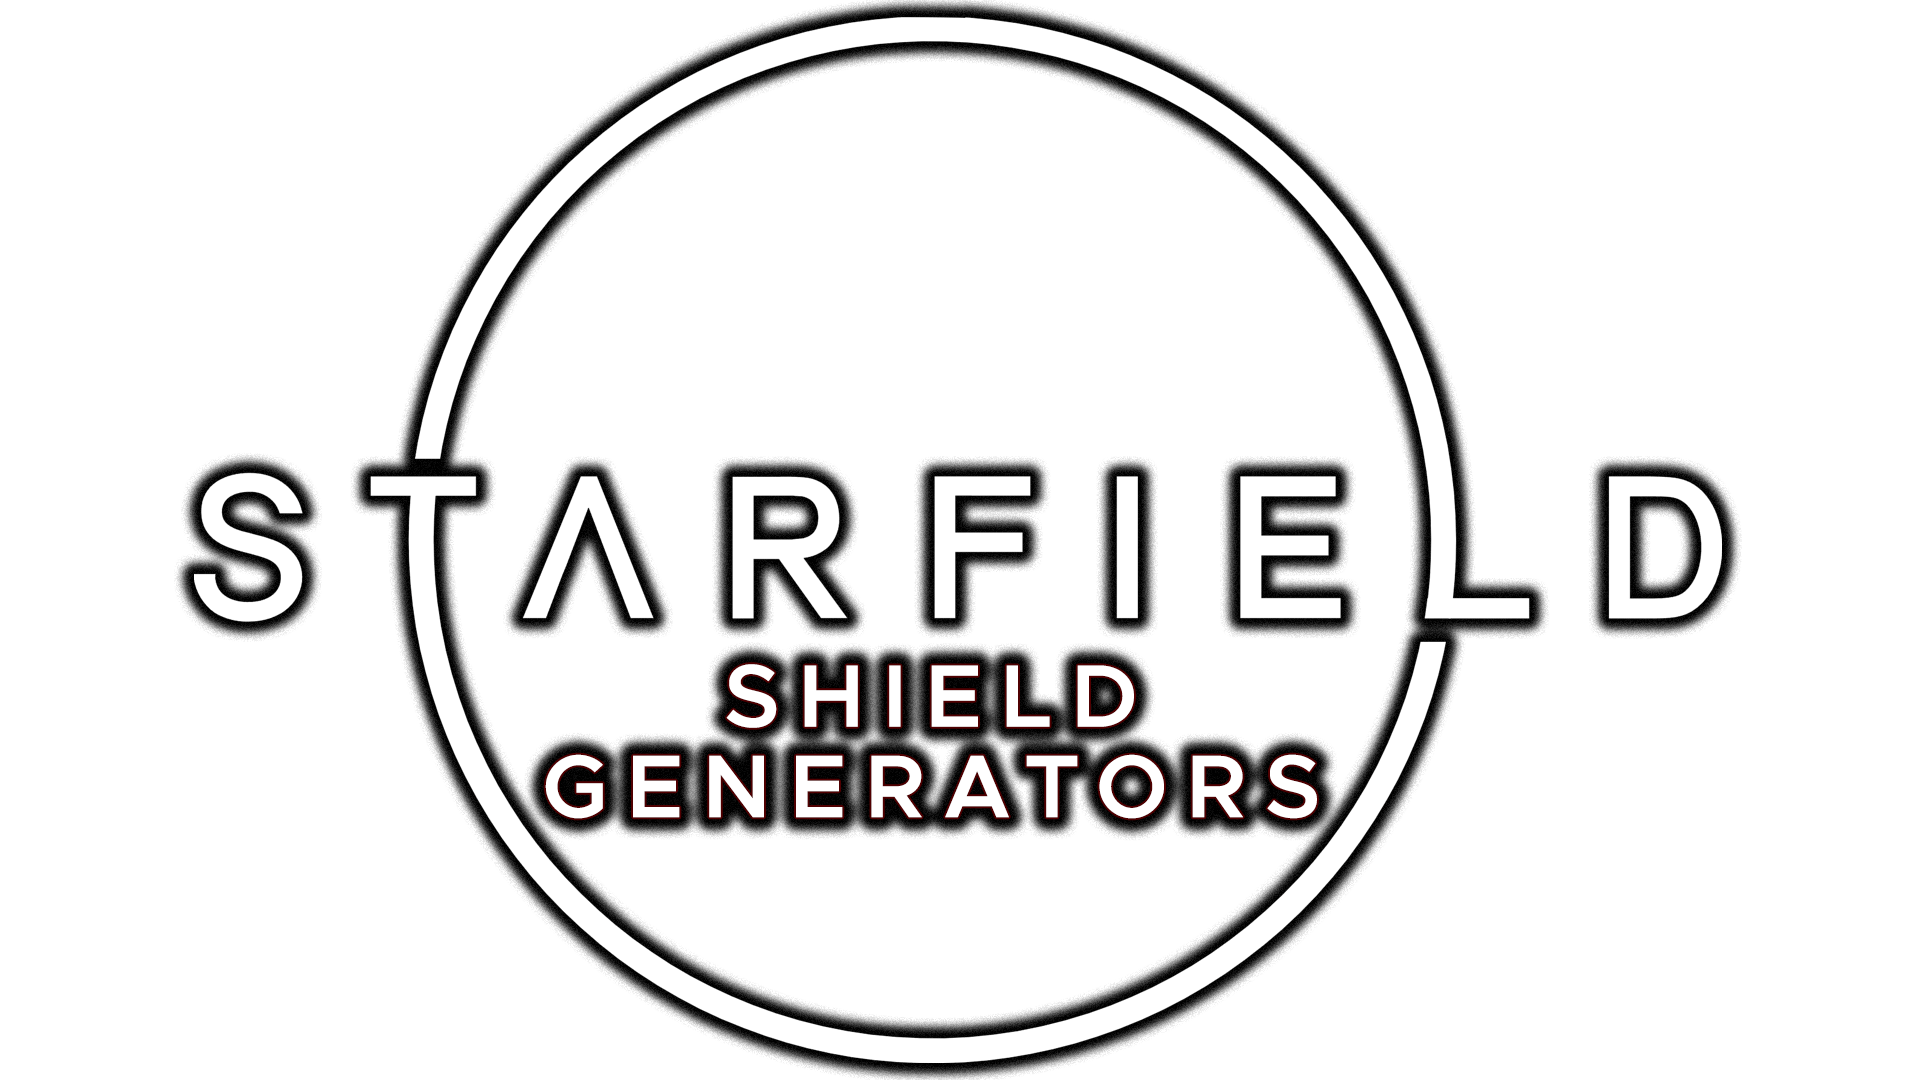 Starfield Ship Modules Guide